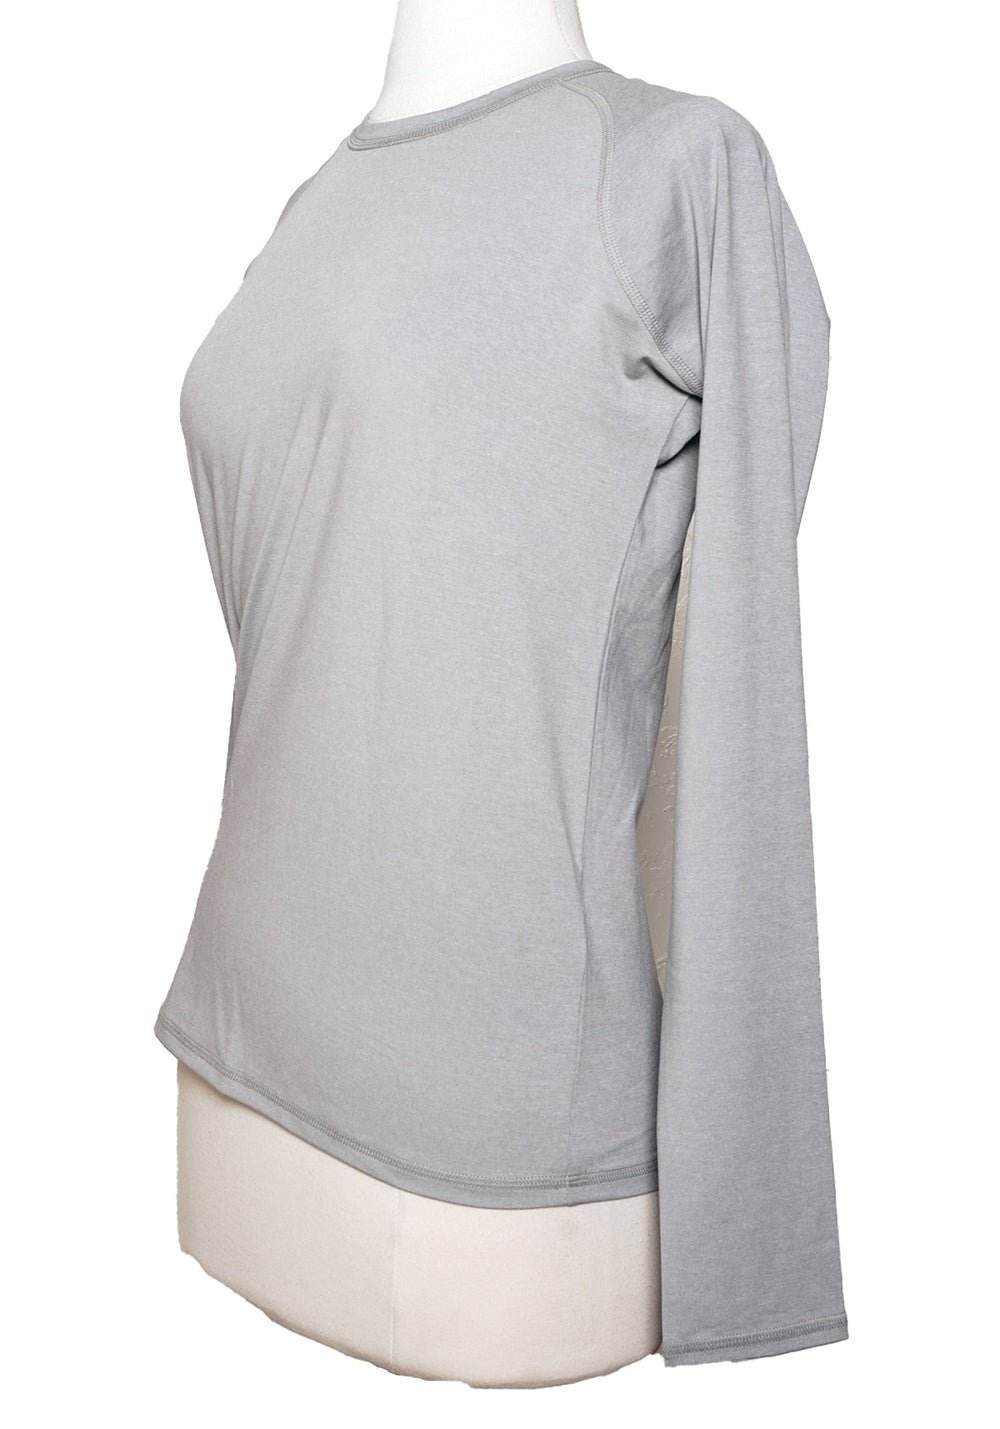 RLX Ralph Lauren Long Sleeve Golf Top - Heather Grey - Size Small - Skorzie